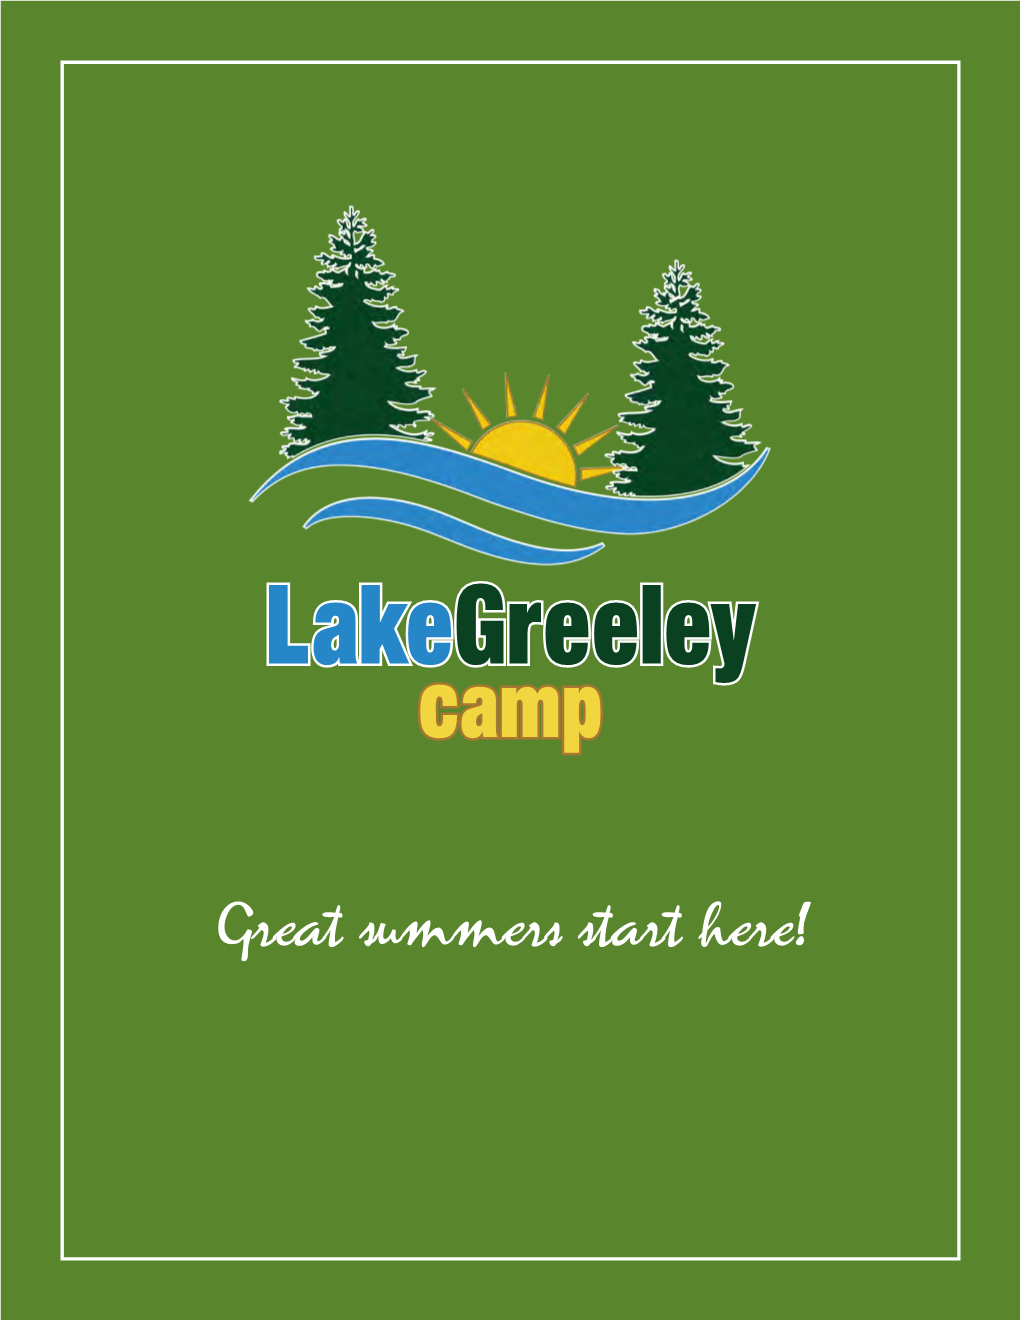 Lakegreeley Camp